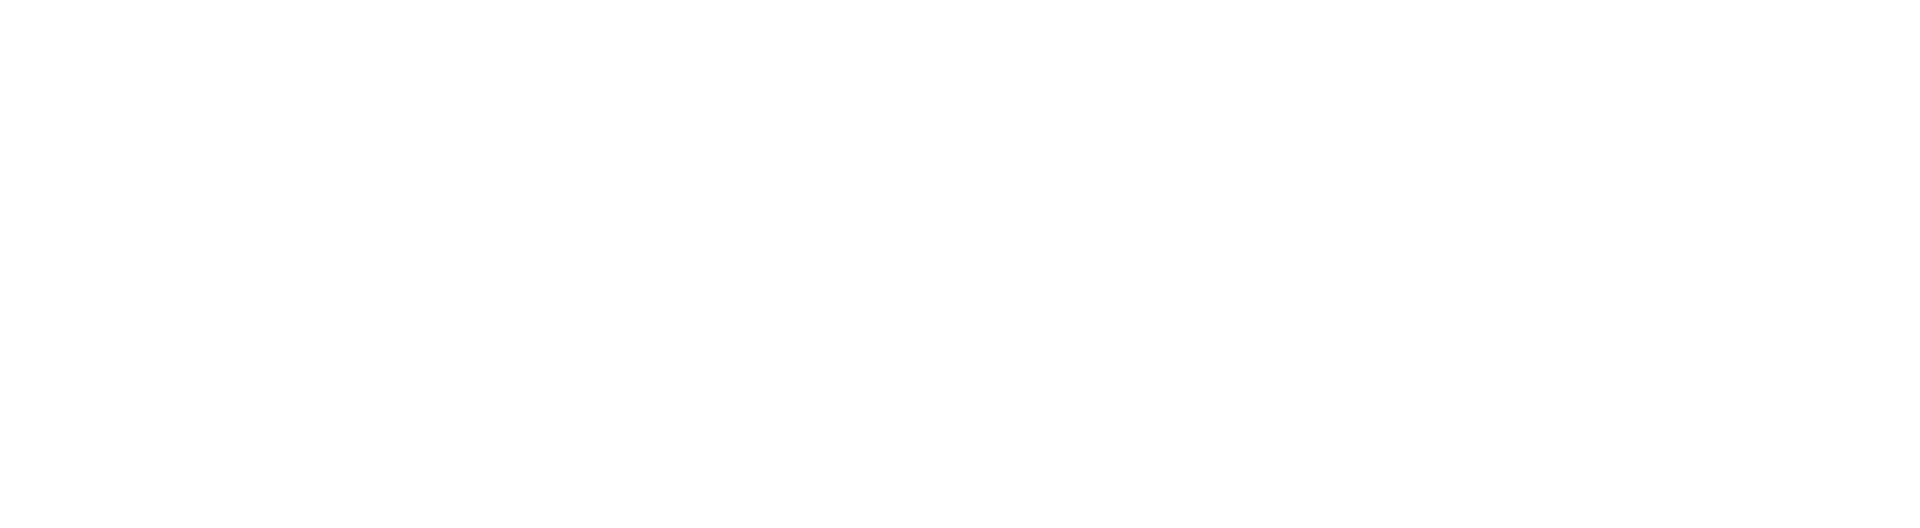 PACE OS logo